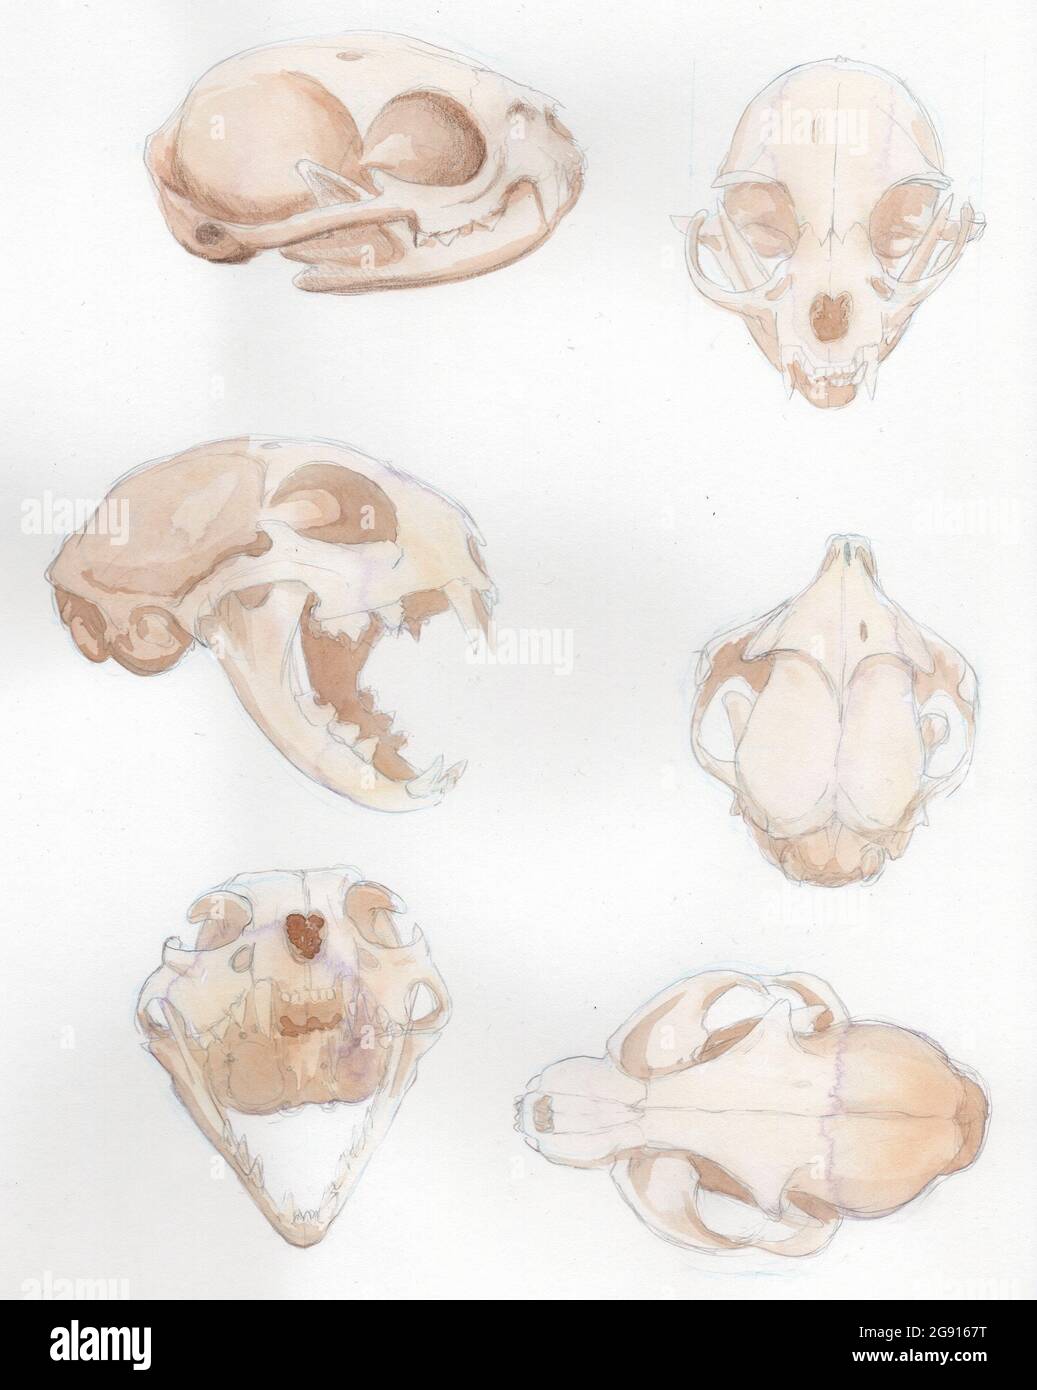 Bobcat skull, illustration Stock Photo